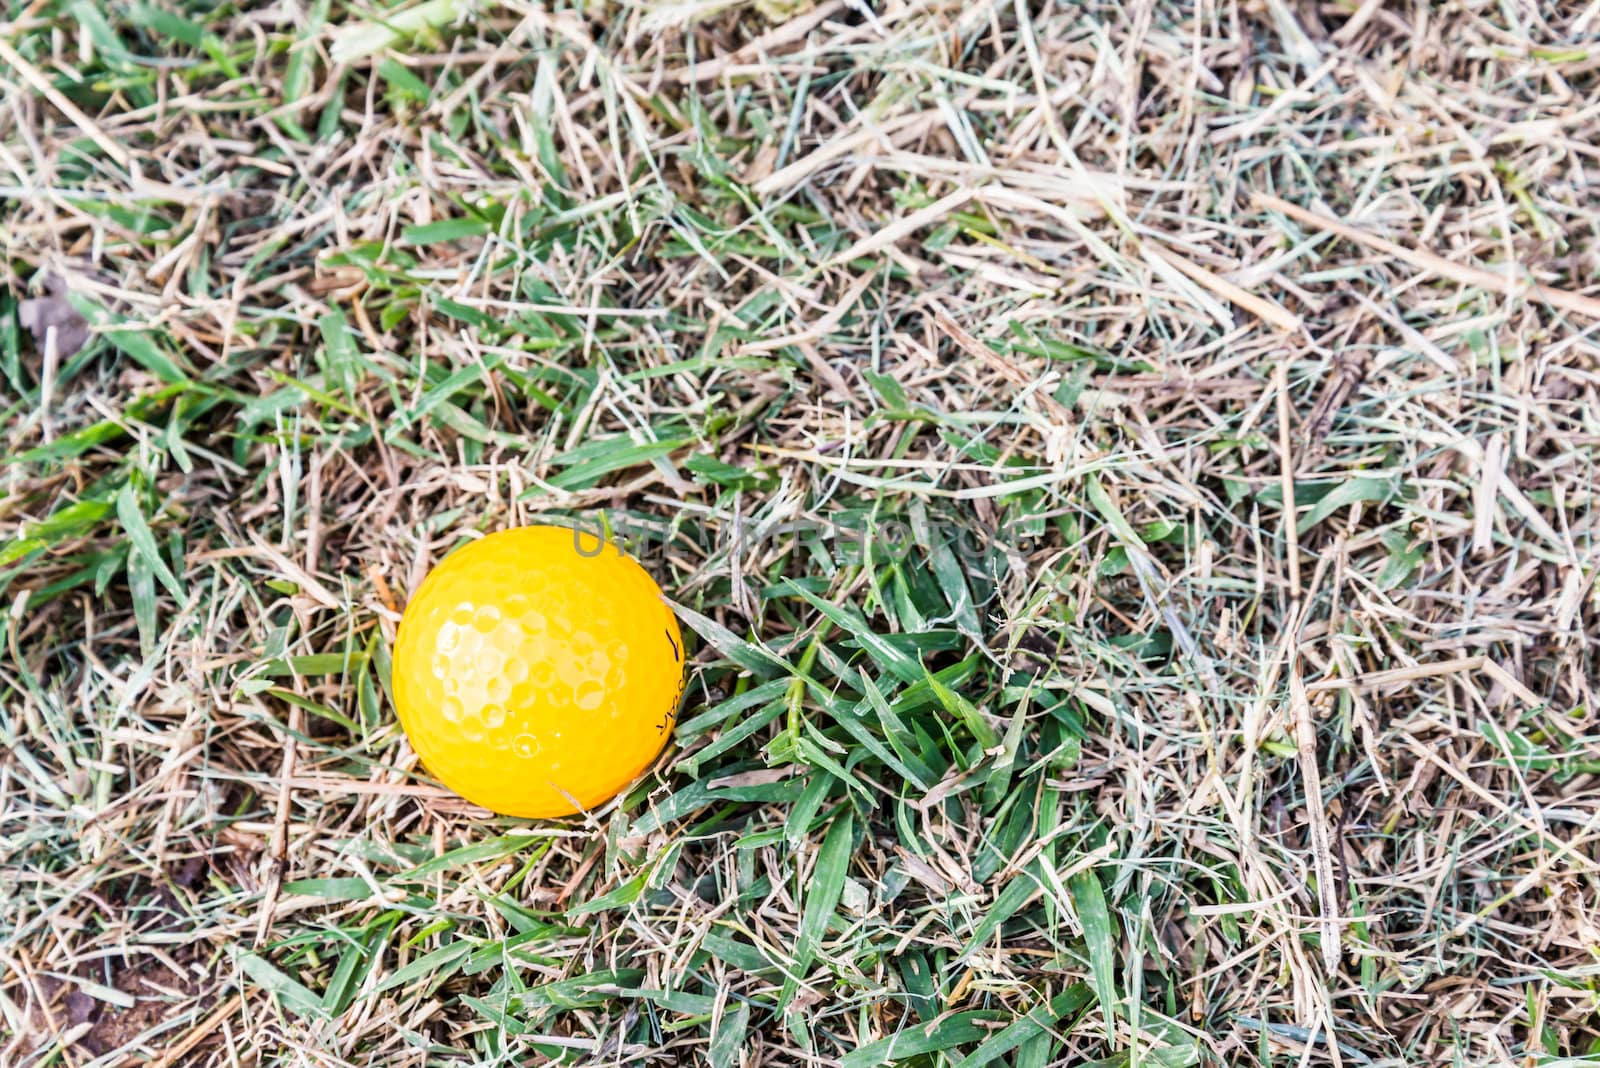 Yellow Miniature Golf Ballin the rough